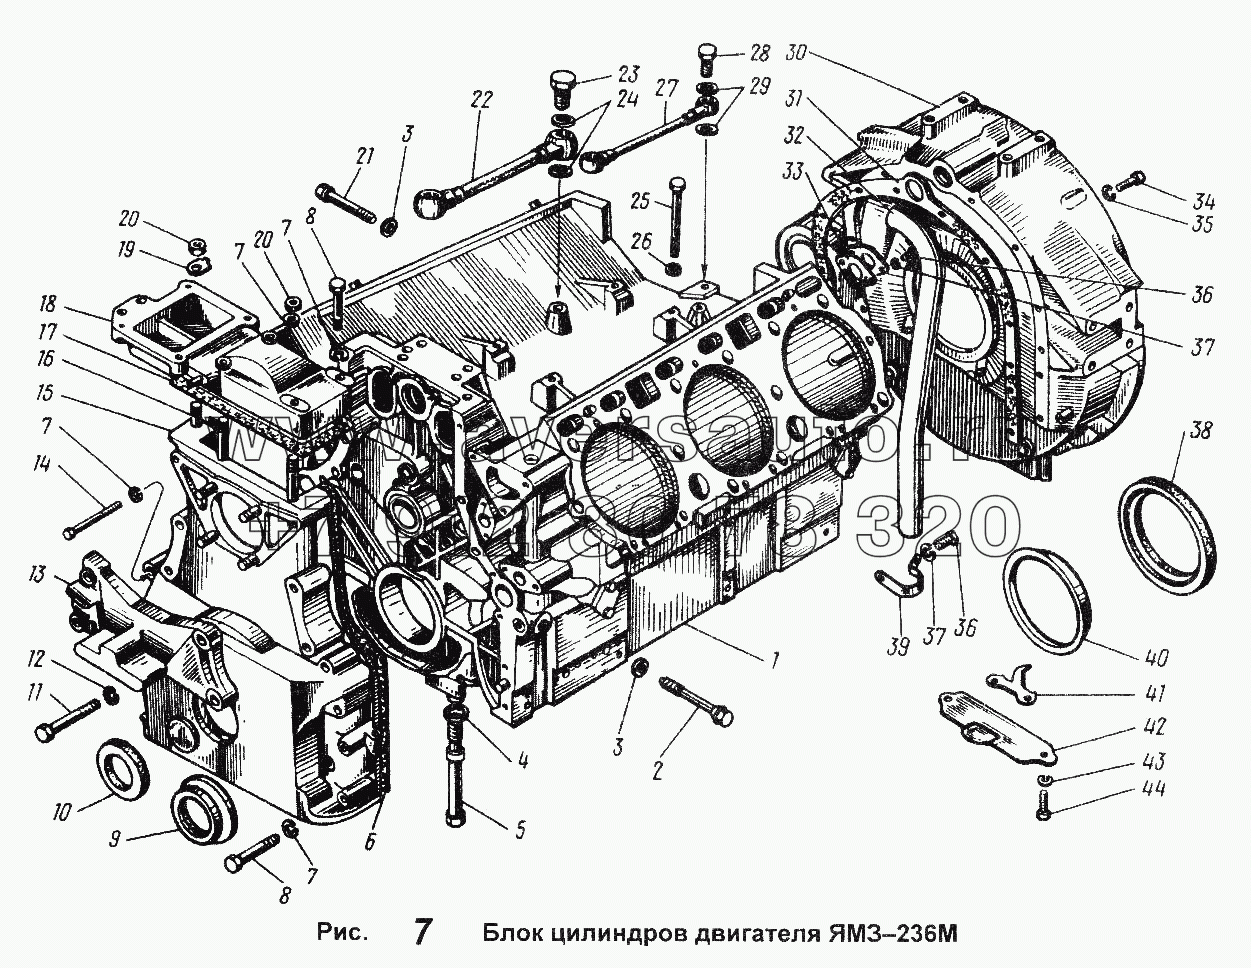 Блок цилиндров двигателя ЯМЗ-236М